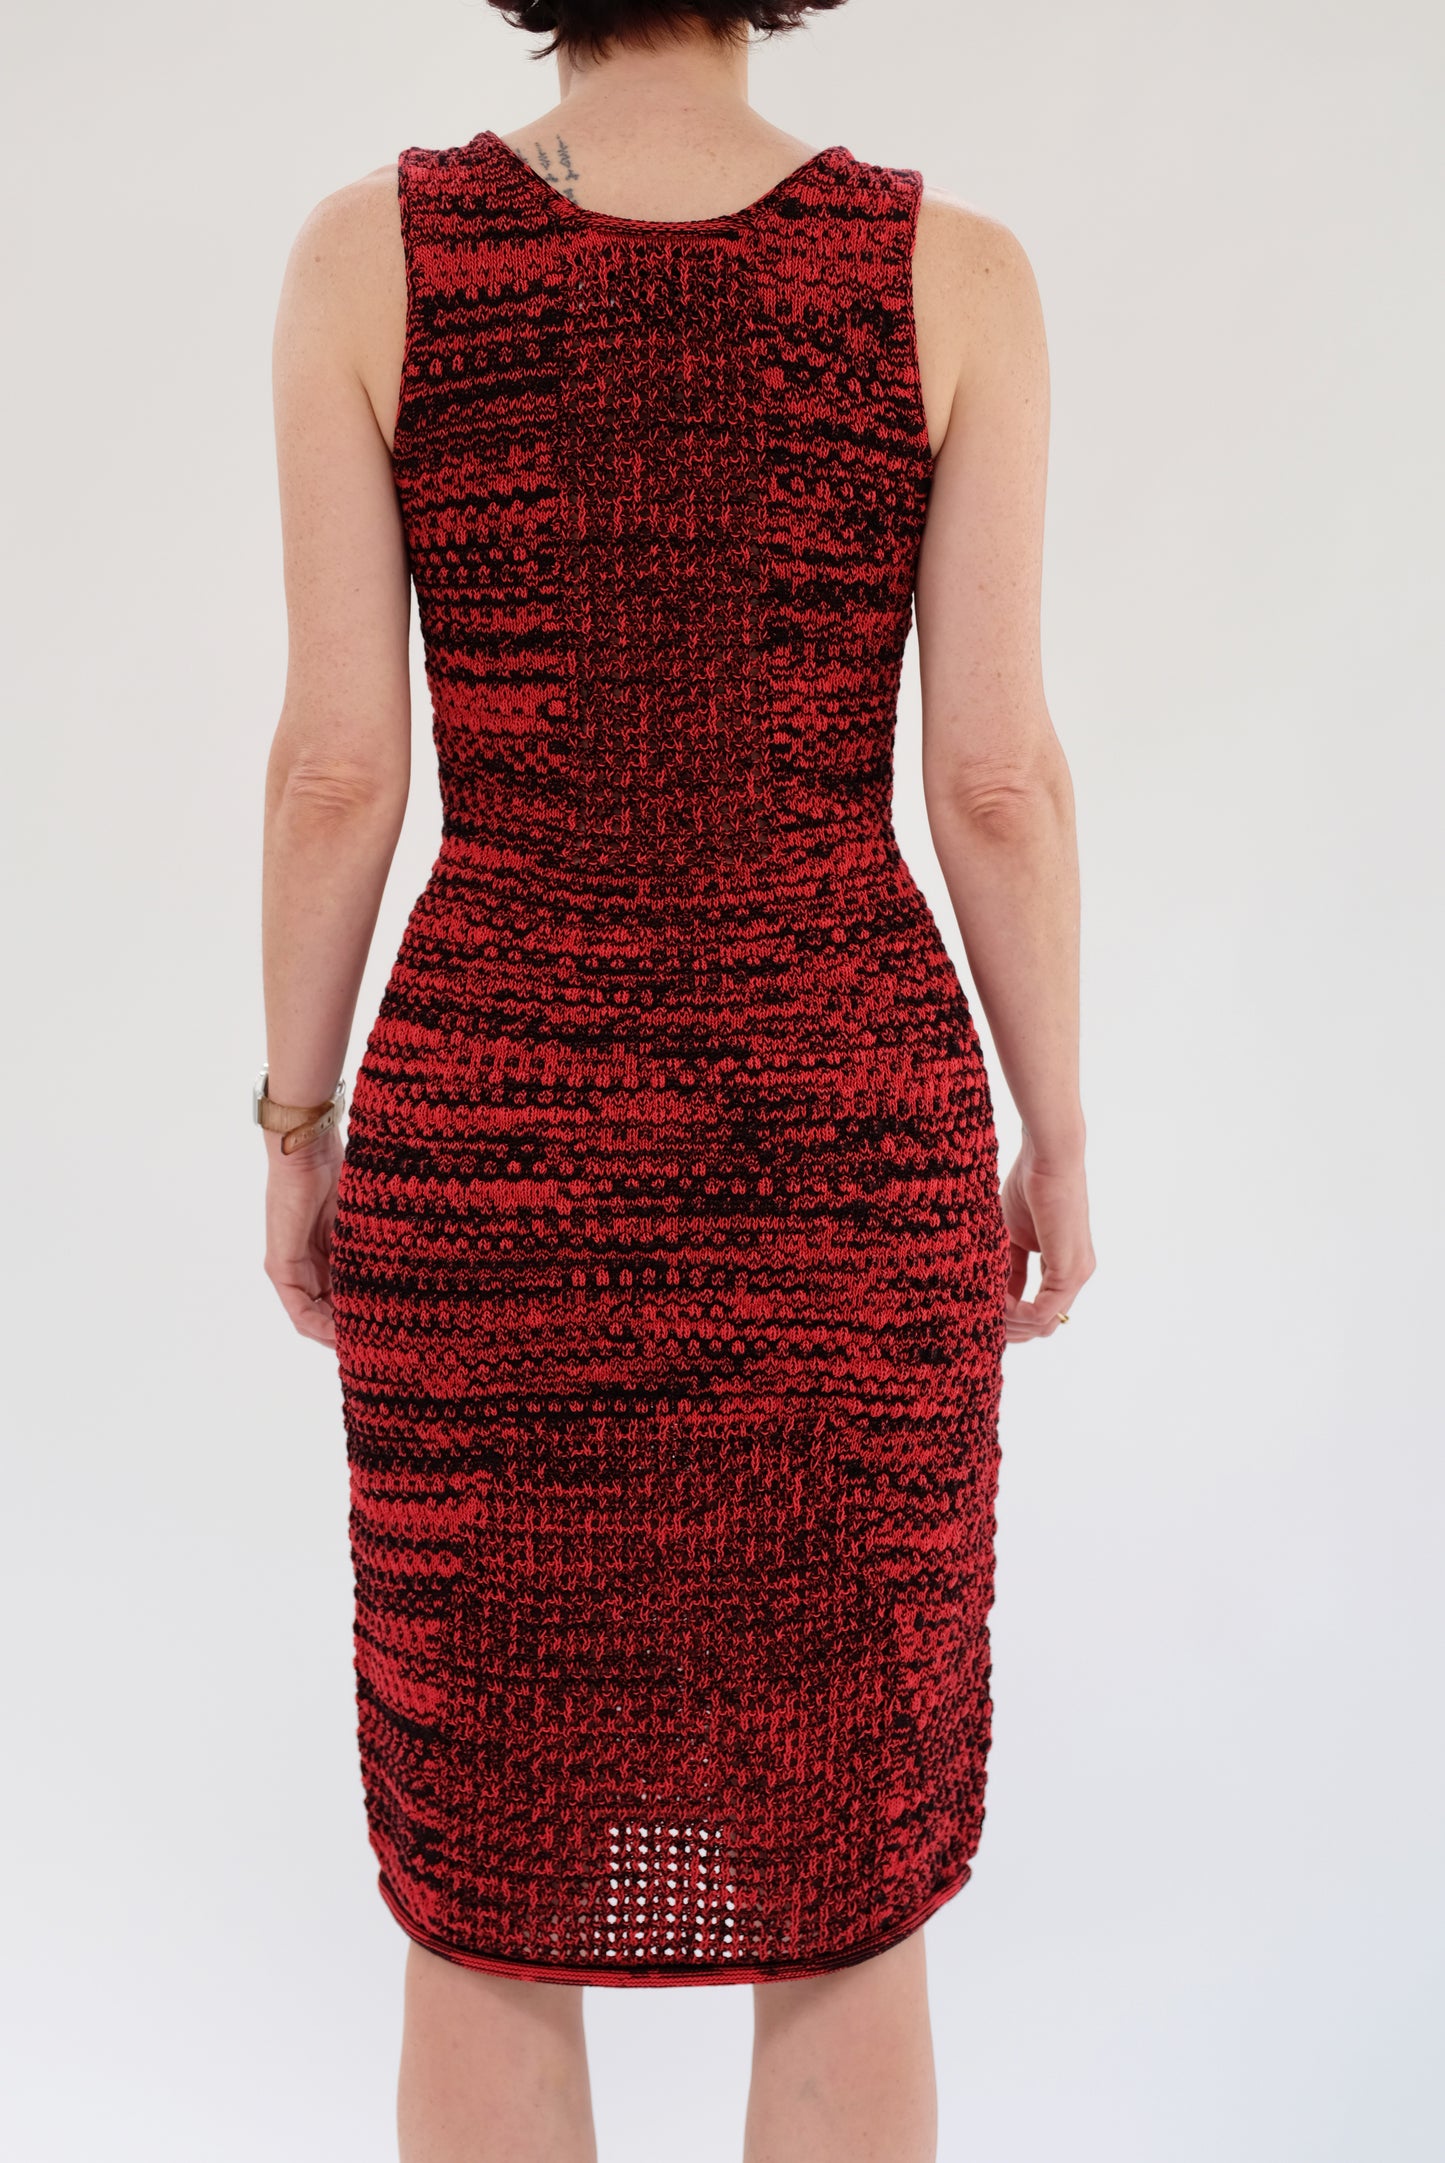 Beklina Haptic Tank Dress Roja